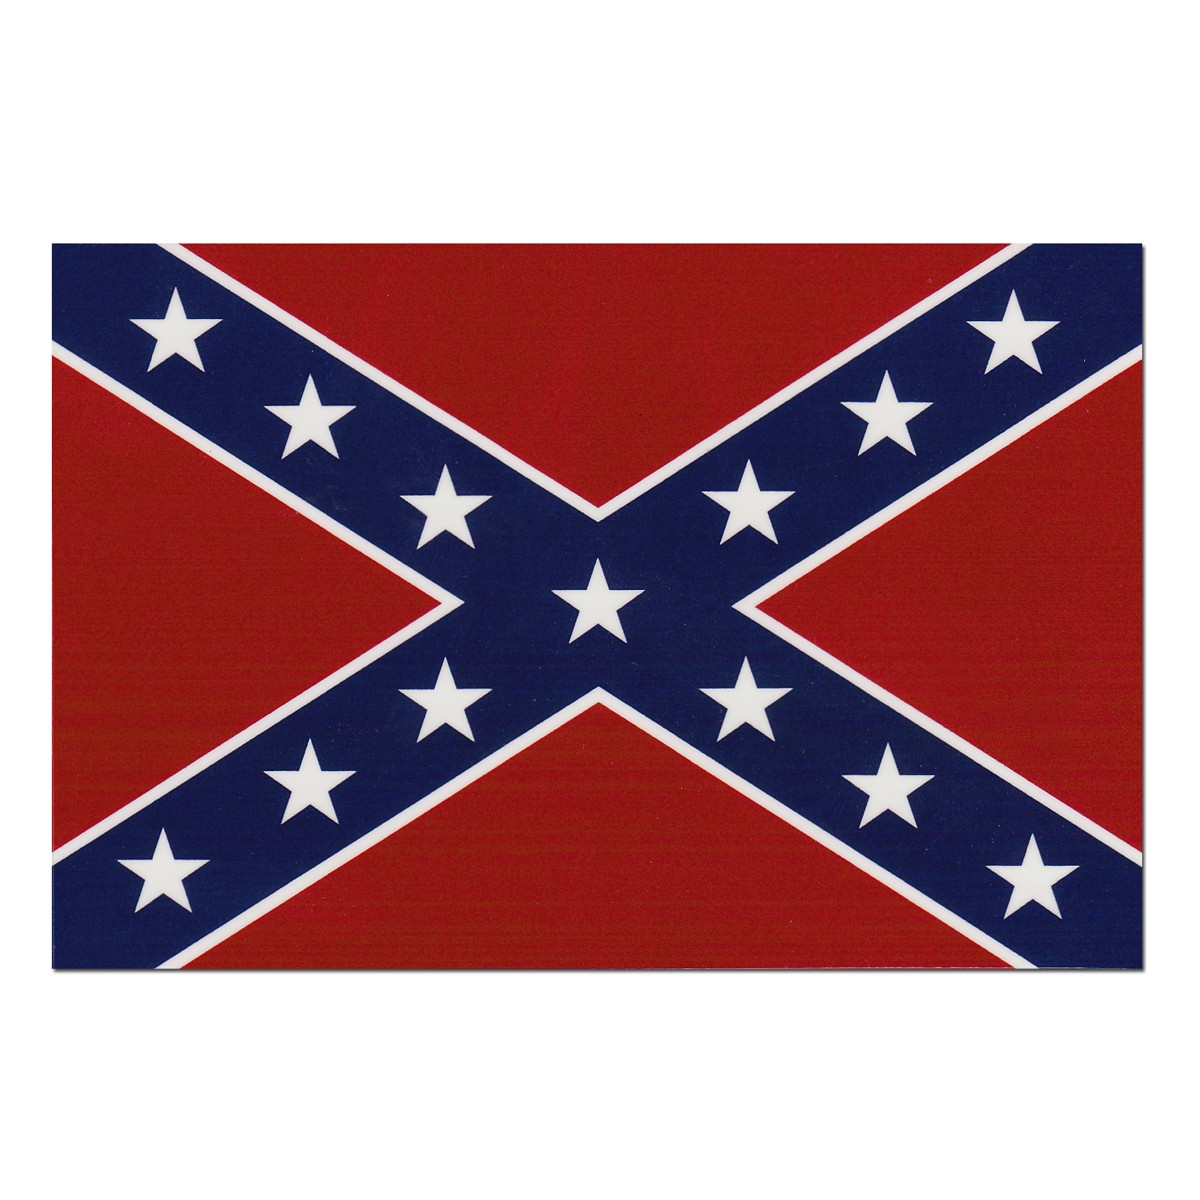 ... Confederate Flag Clipart - ClipArt Best ...